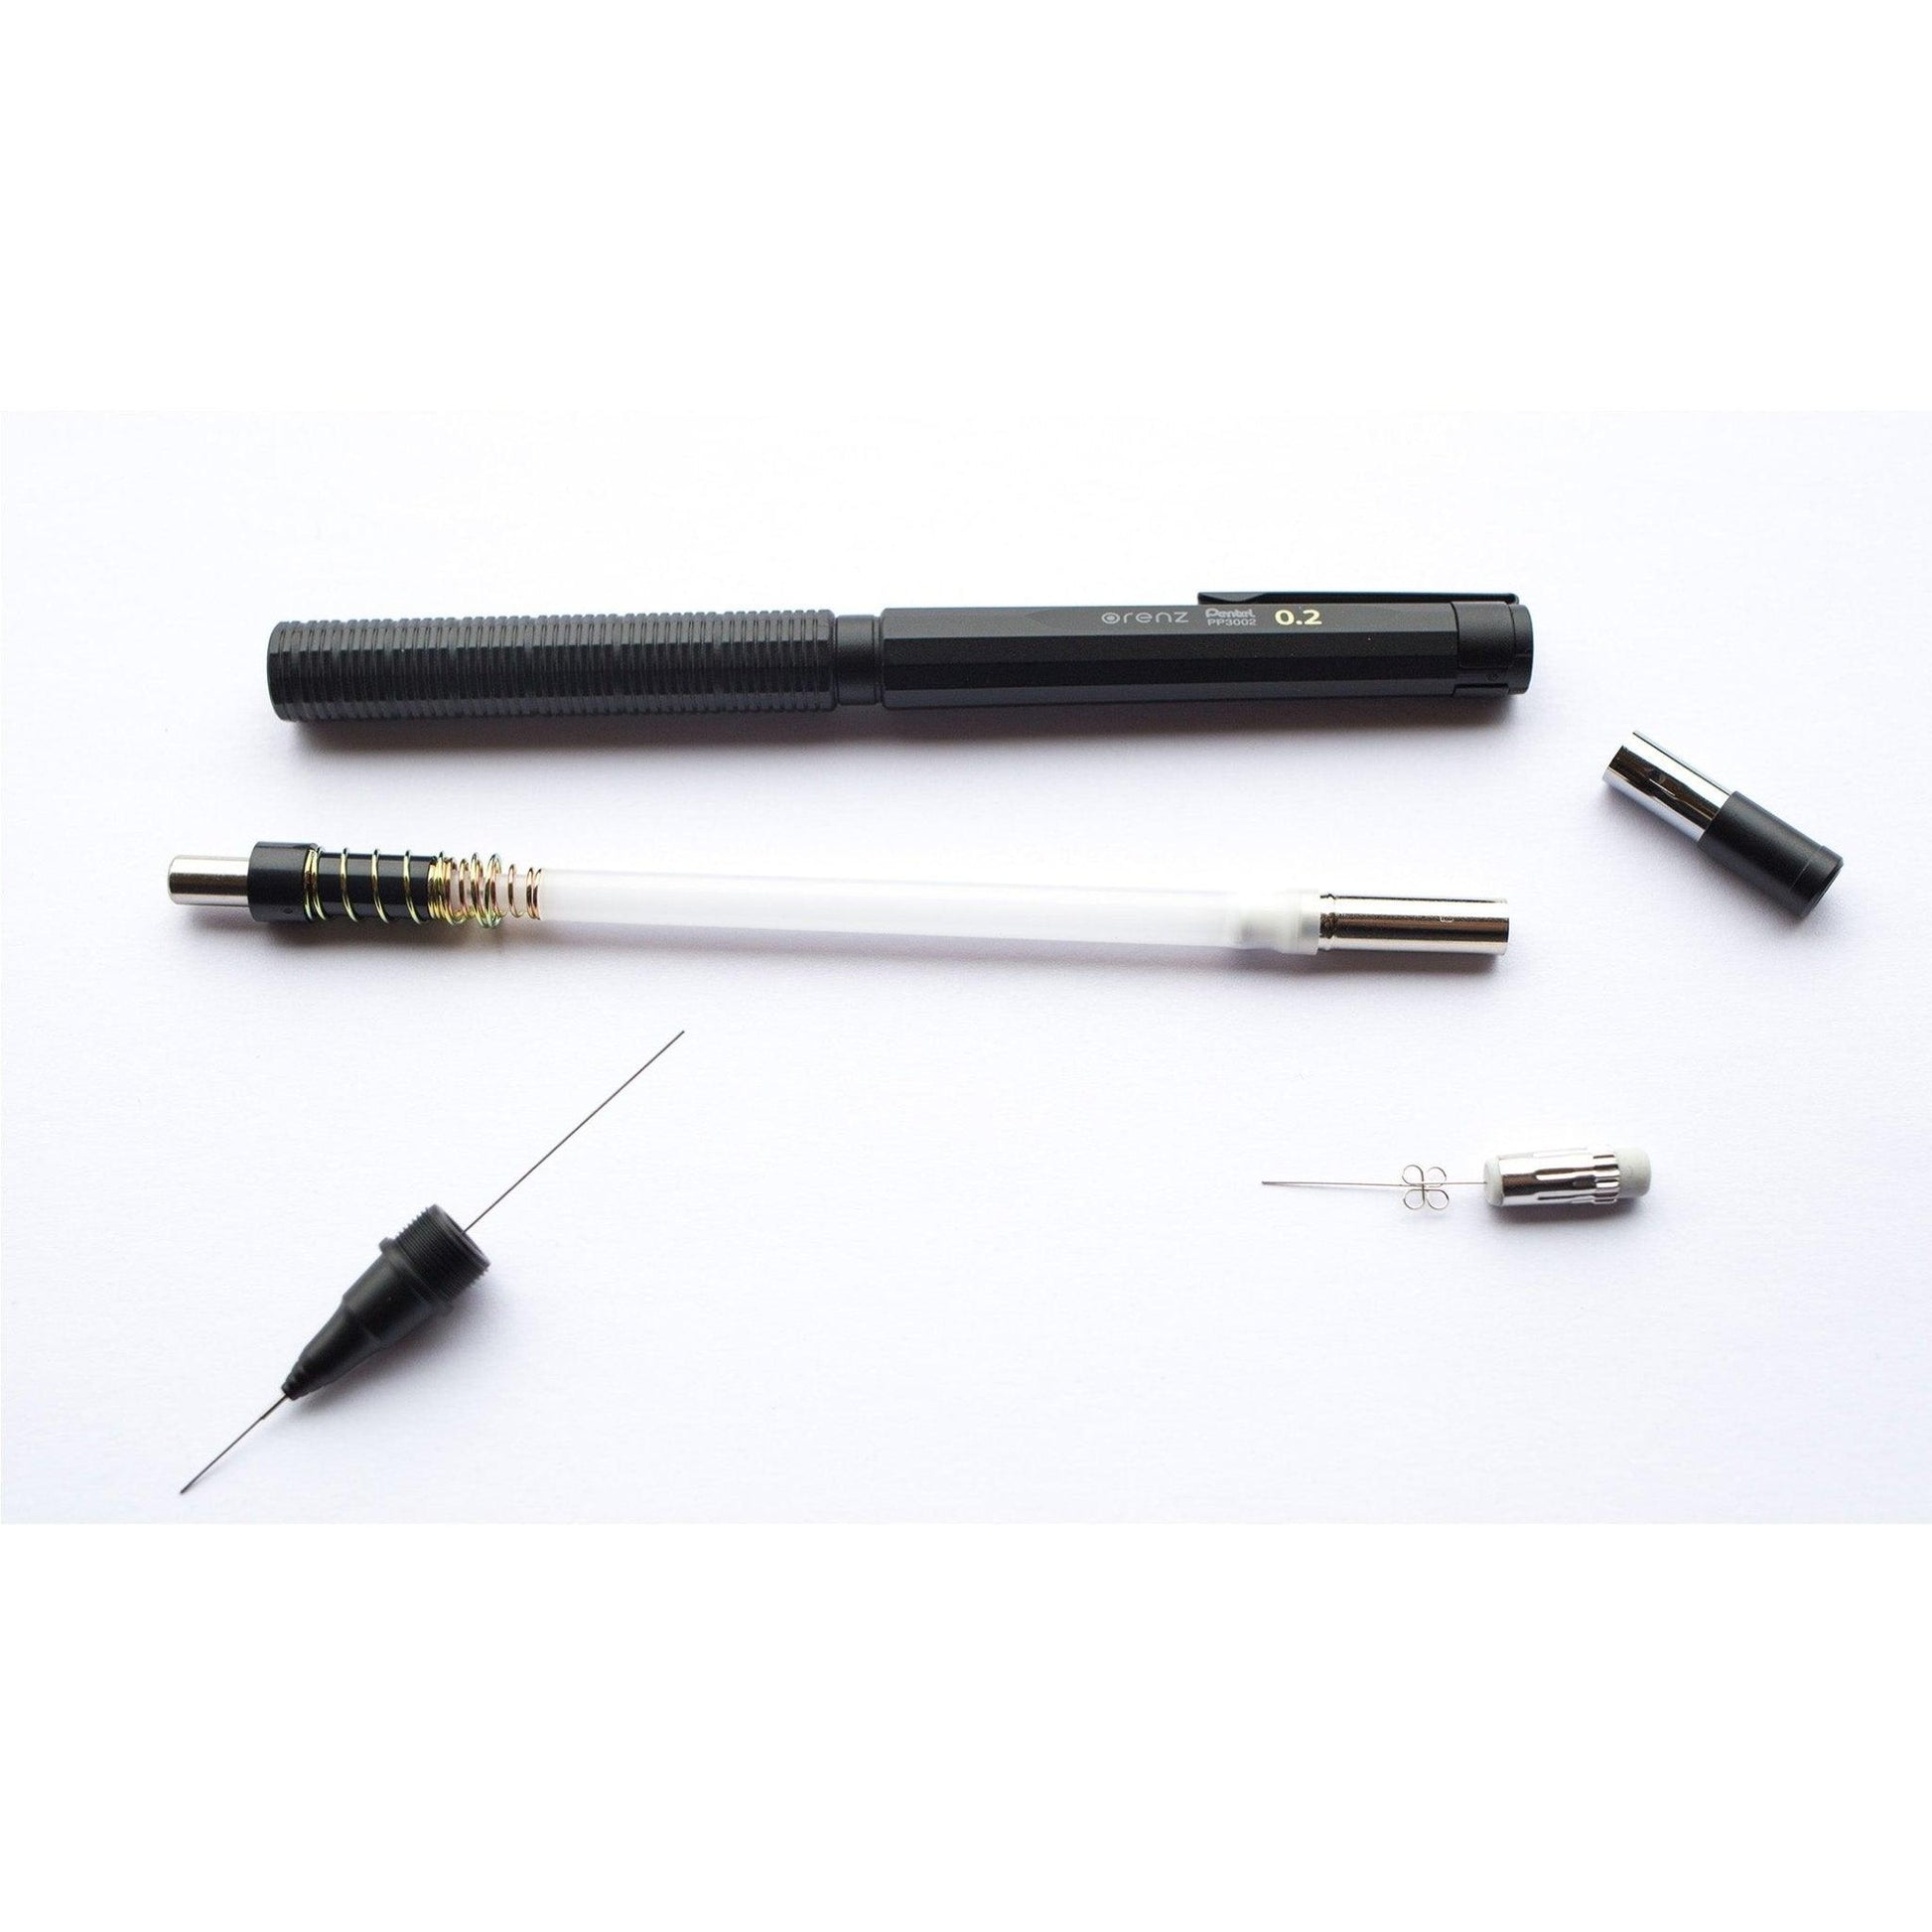 Pentel Orensnero PP3002-A Mechanical Pencil Drawing Pencil Premium Pencil 0.2mm HB Black - CHL-STORE 